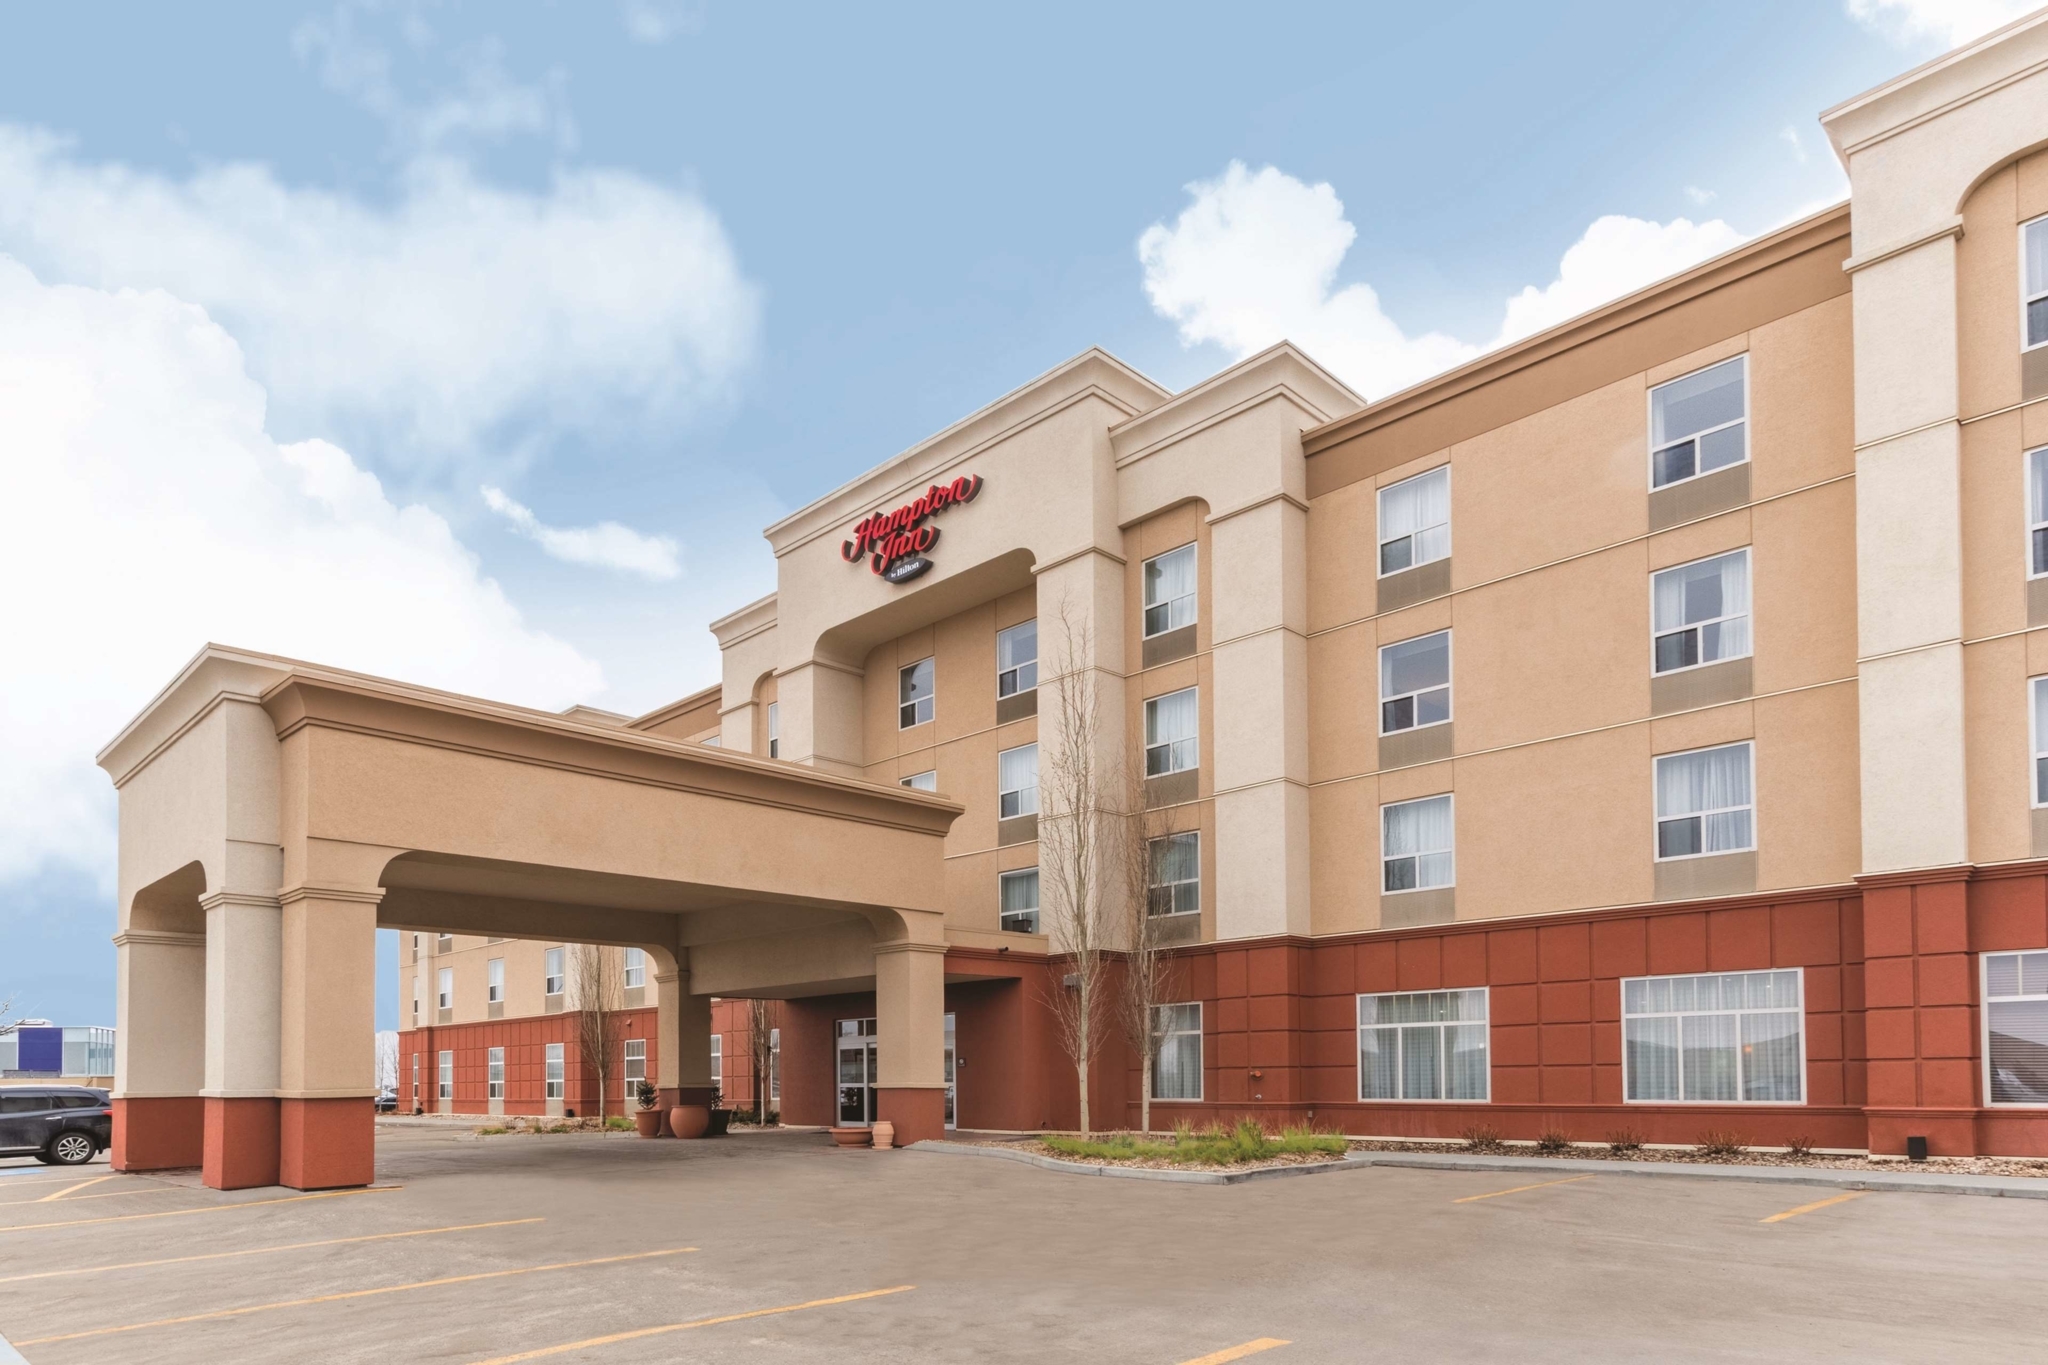 Hampton Inn by Hilton Edmonton/South, Alberta, Canada - Out-of-Town Hotels & Motels